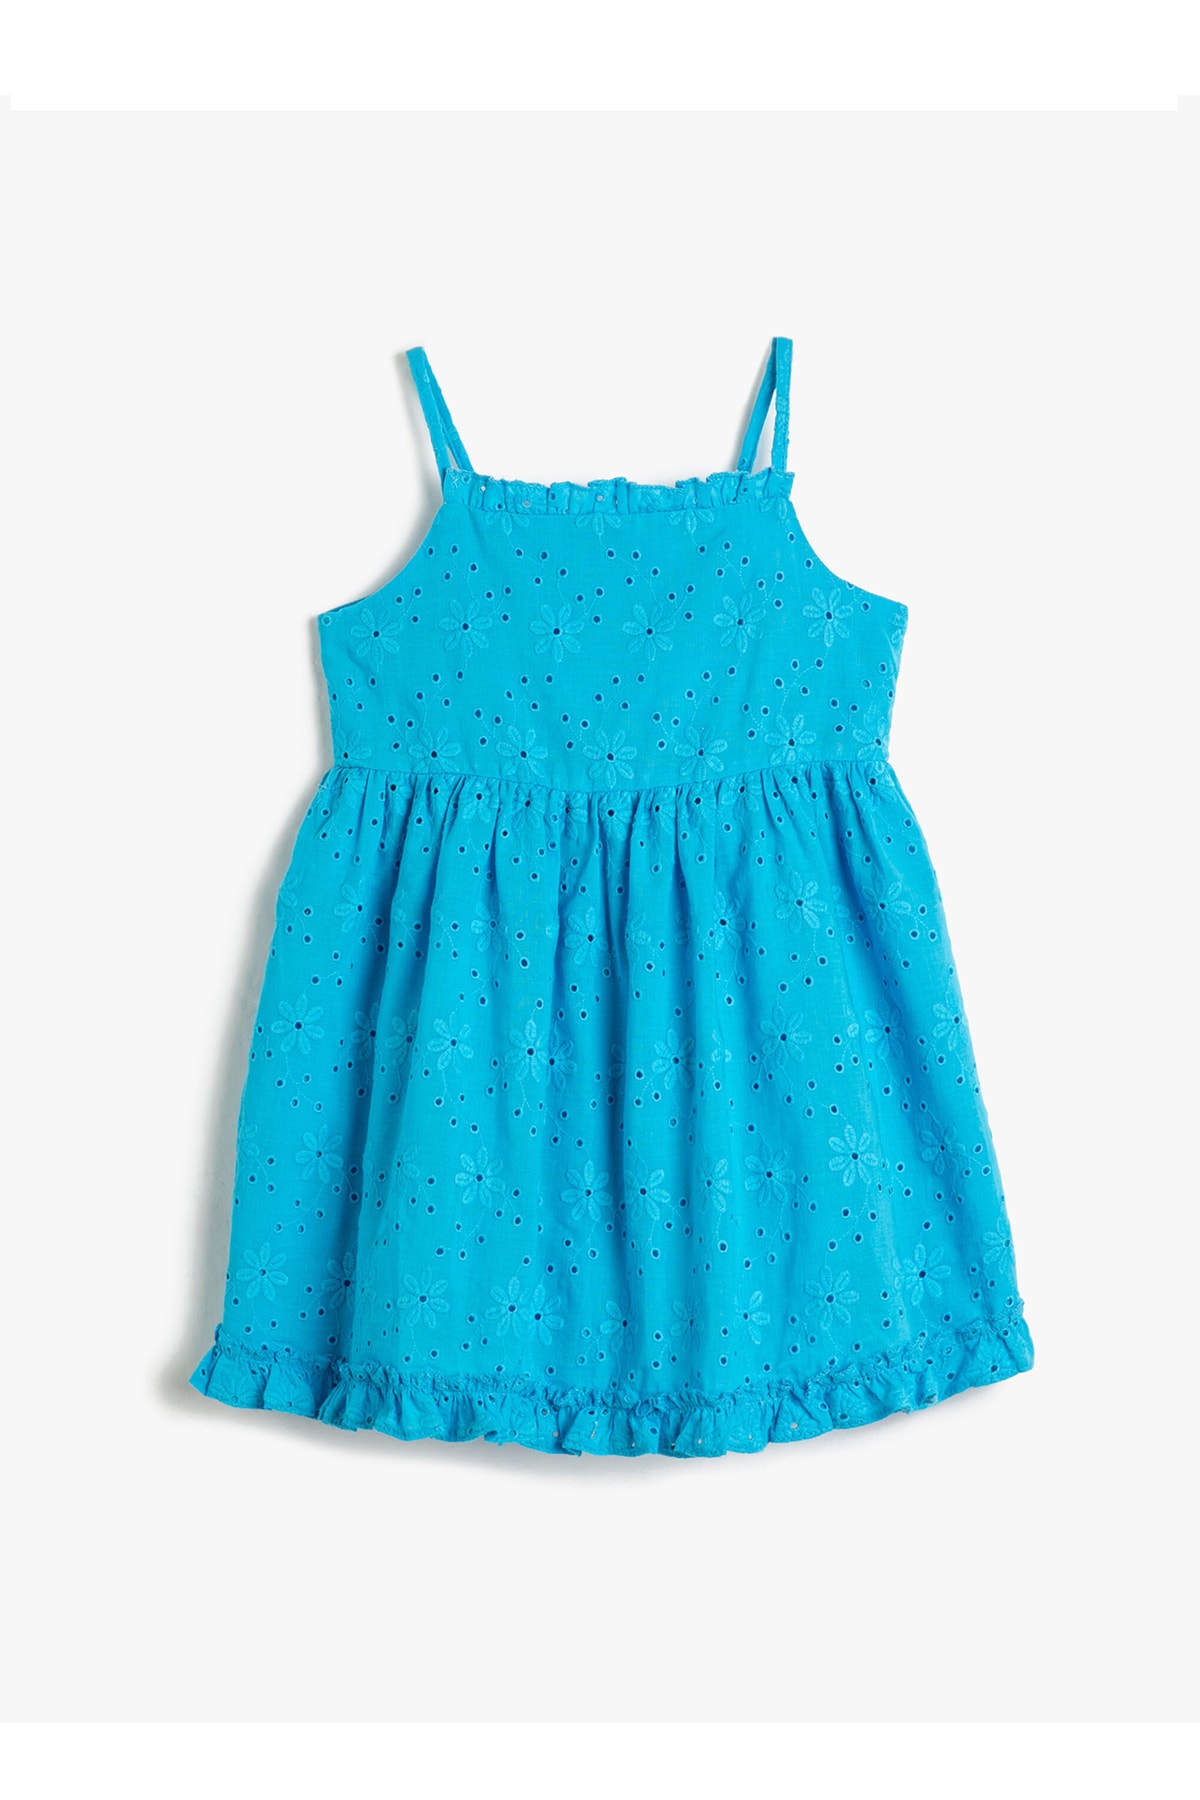 Koton Plain Turquoise Girl's Below Knee Dress 3skg80079aw